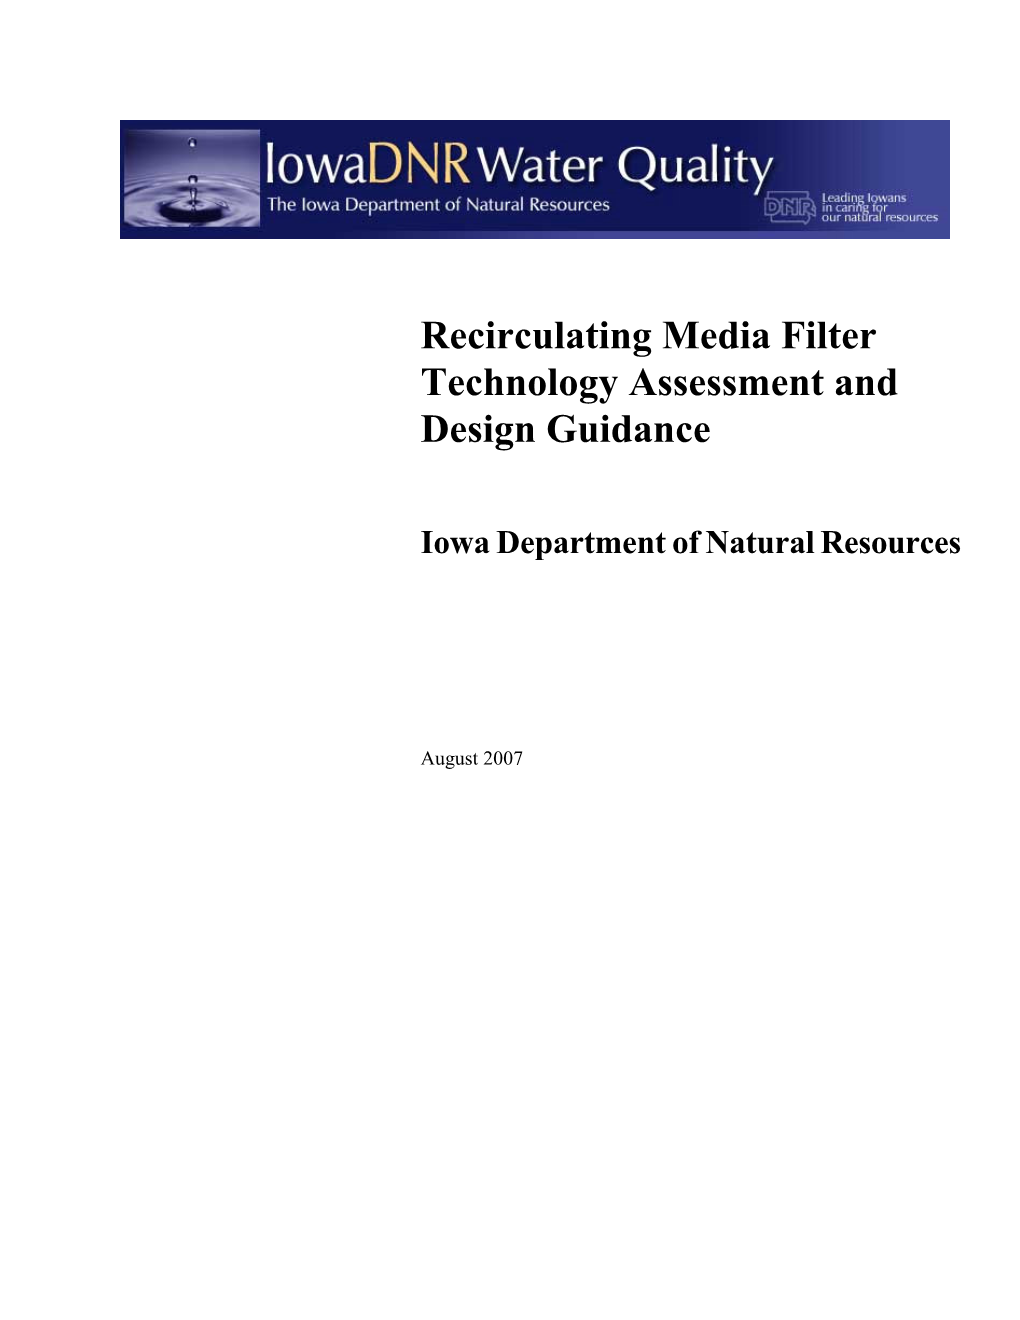 Recirculating Media Filter Technology Assessment and Design Guidance